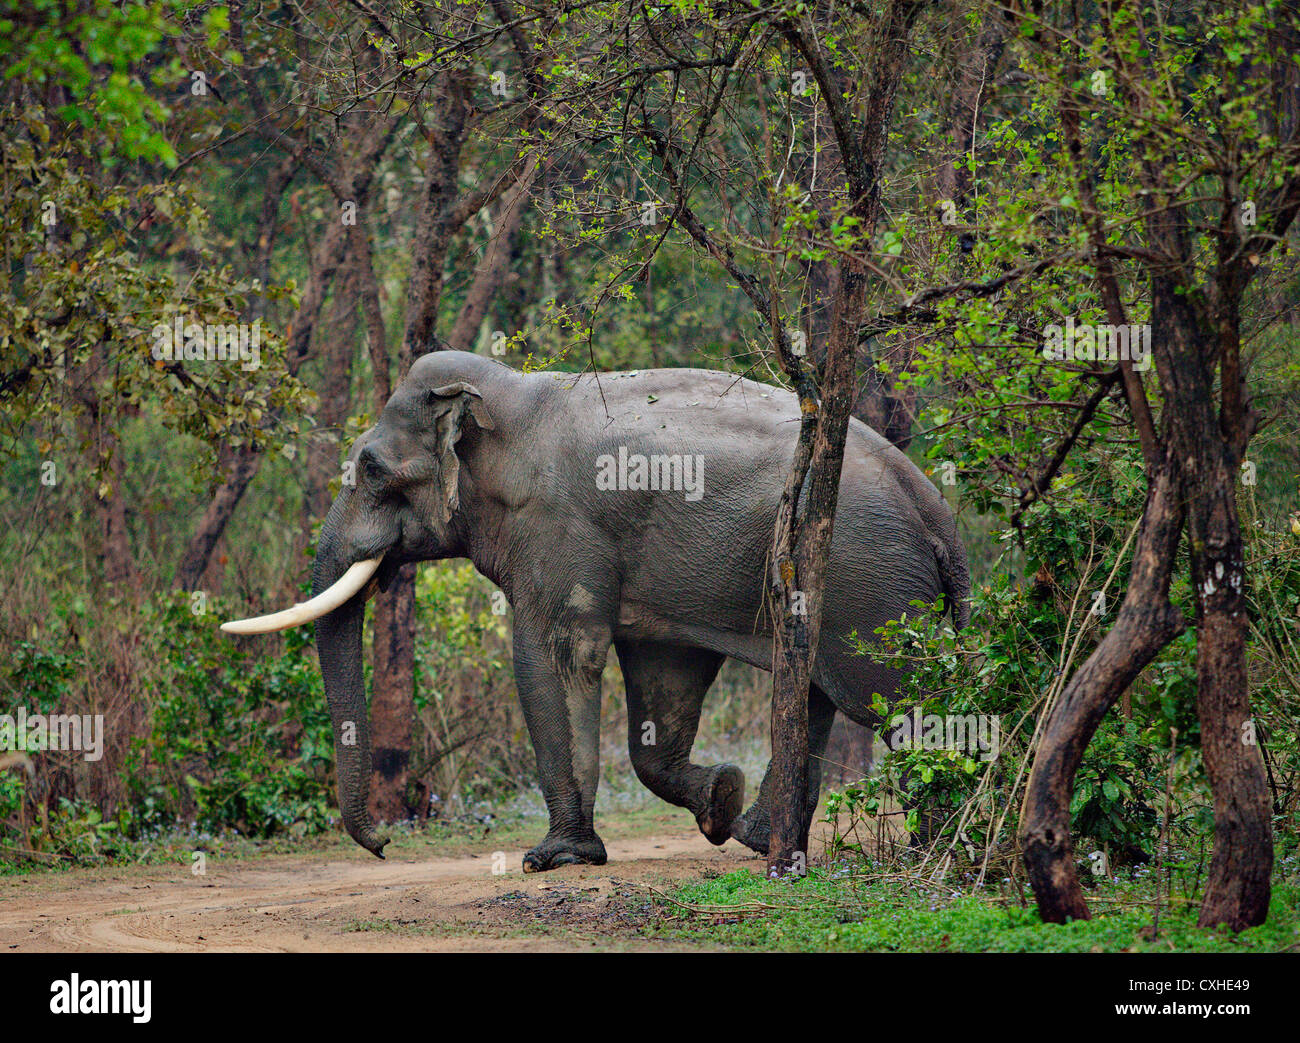 Wild elephant crossing a road in Dhikala area in Jim Corbett Tiger Reserve, India. Stock Photo